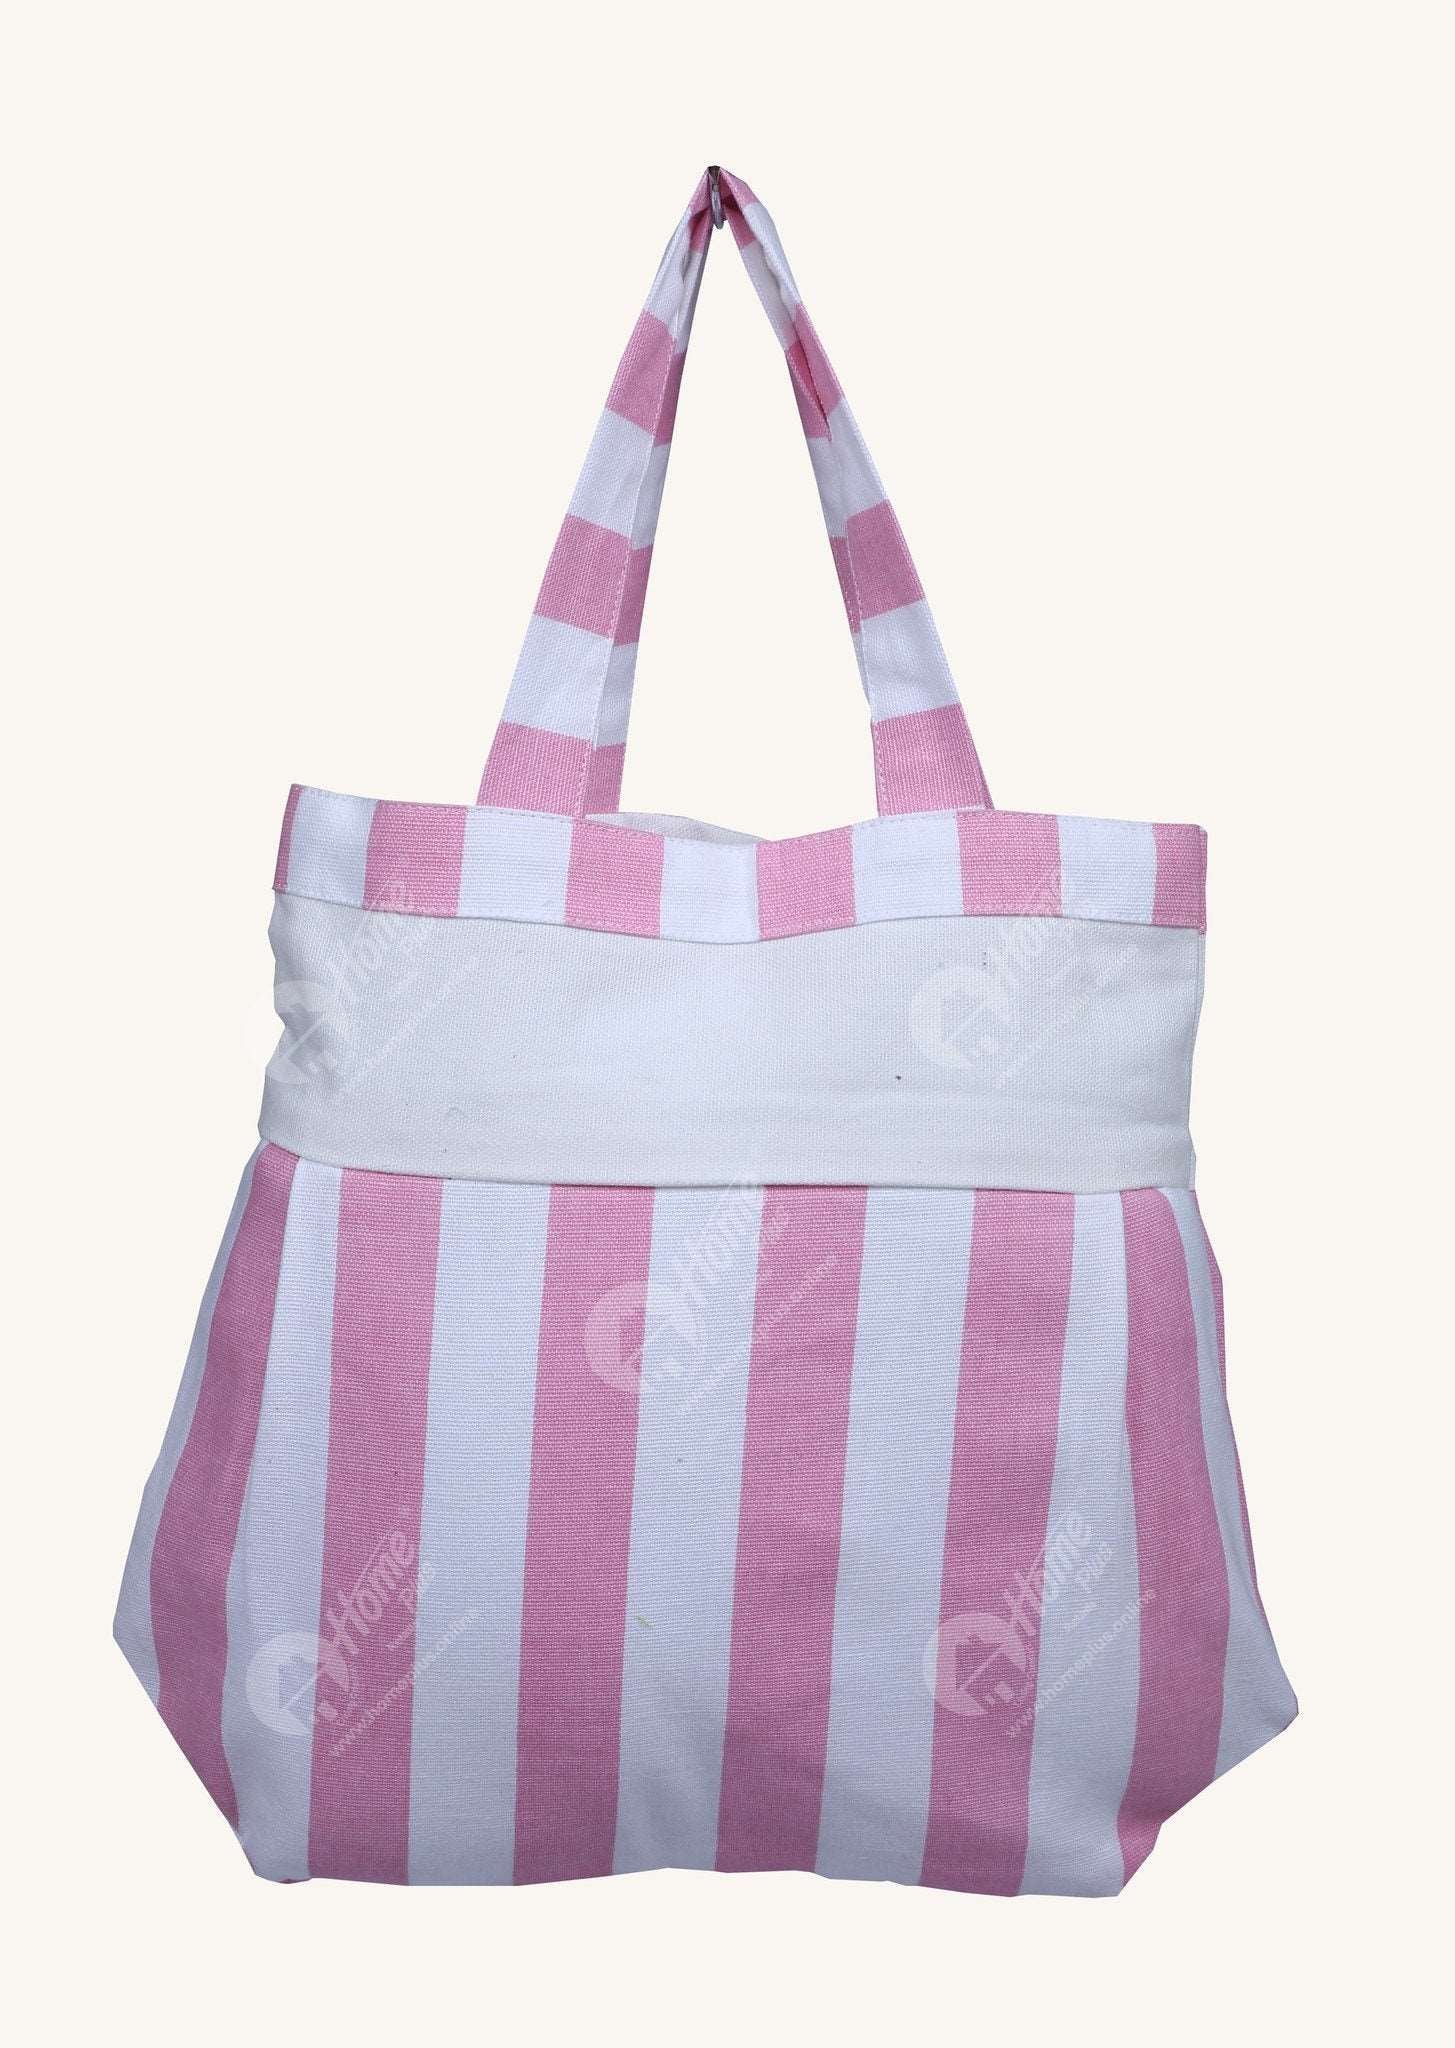 Fancy bag - Thick Stripe Pink